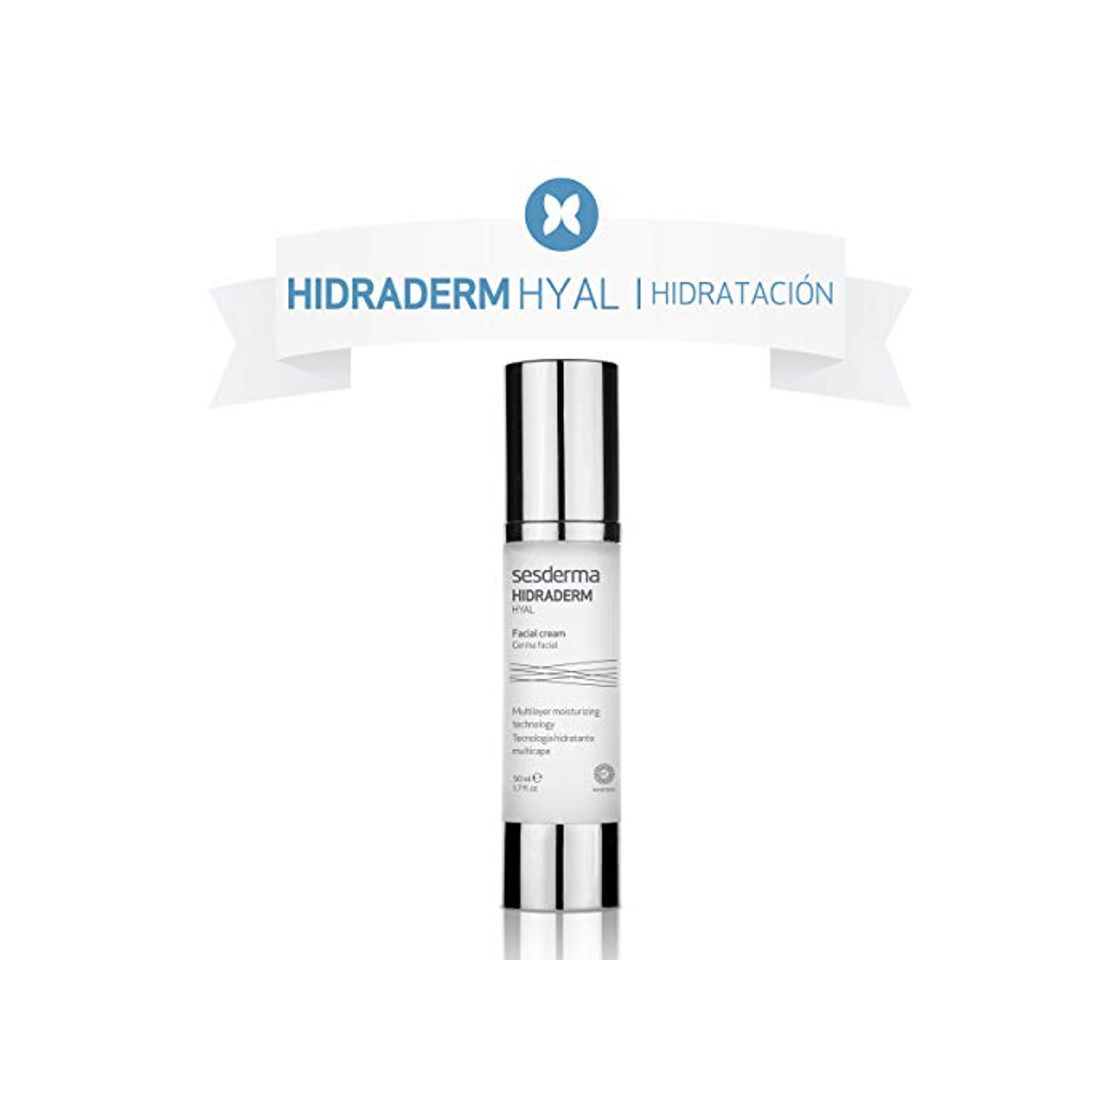 SESDERMA Hidraderm Hyal Crema Hidratante 50 ml